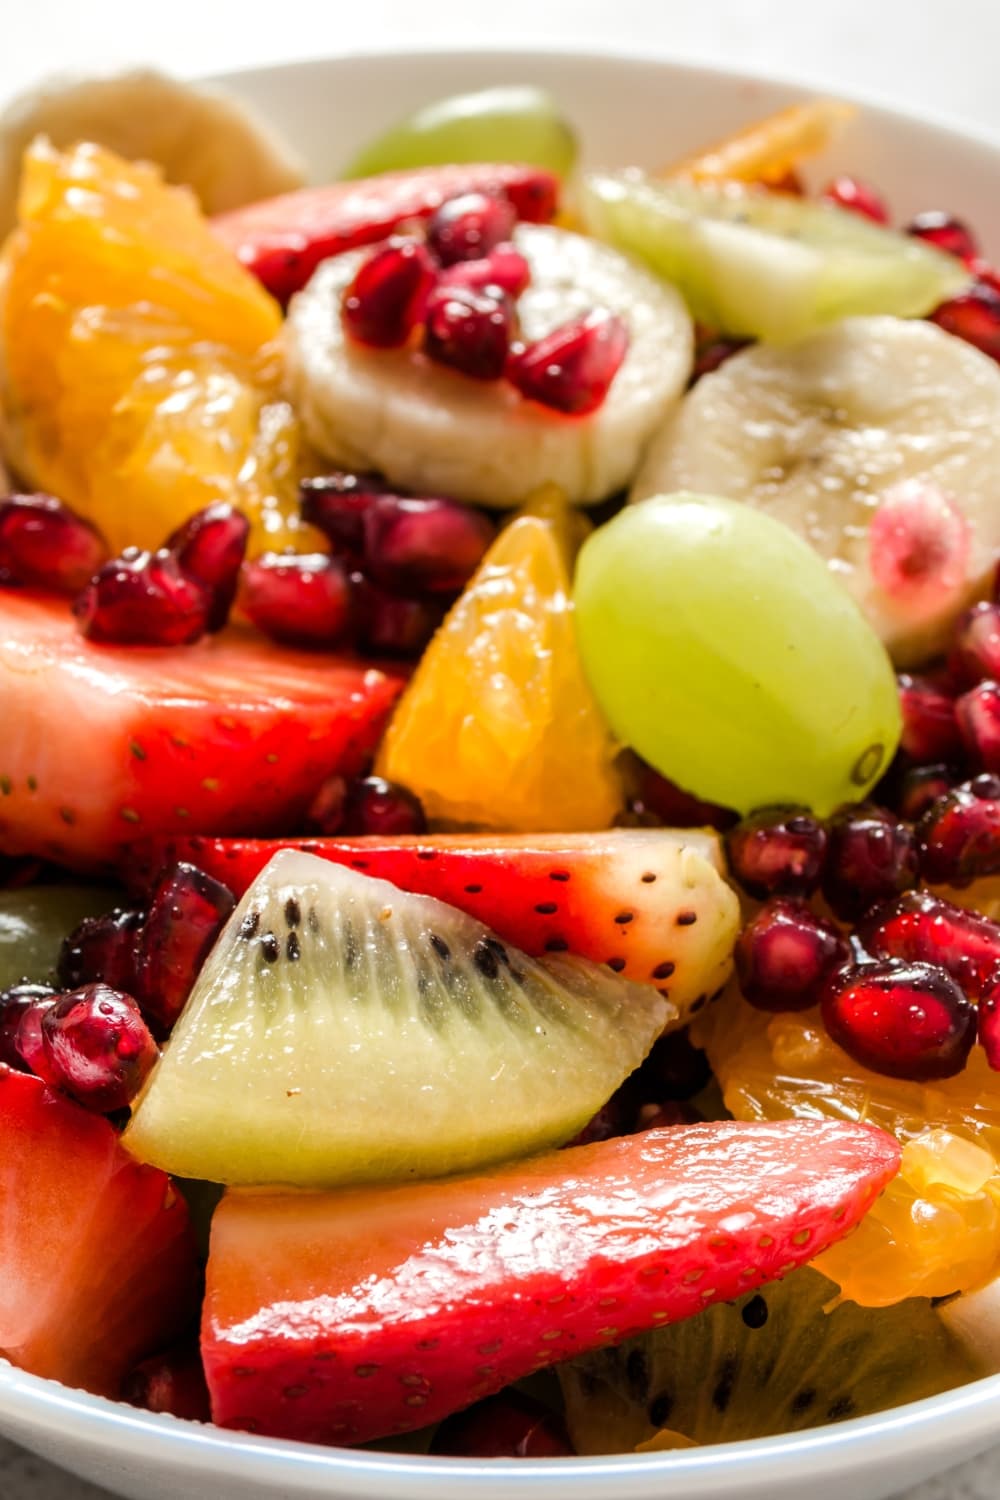 Homemade Fruit Salad with Kiwi, Orange, Pomegranate and Grapes